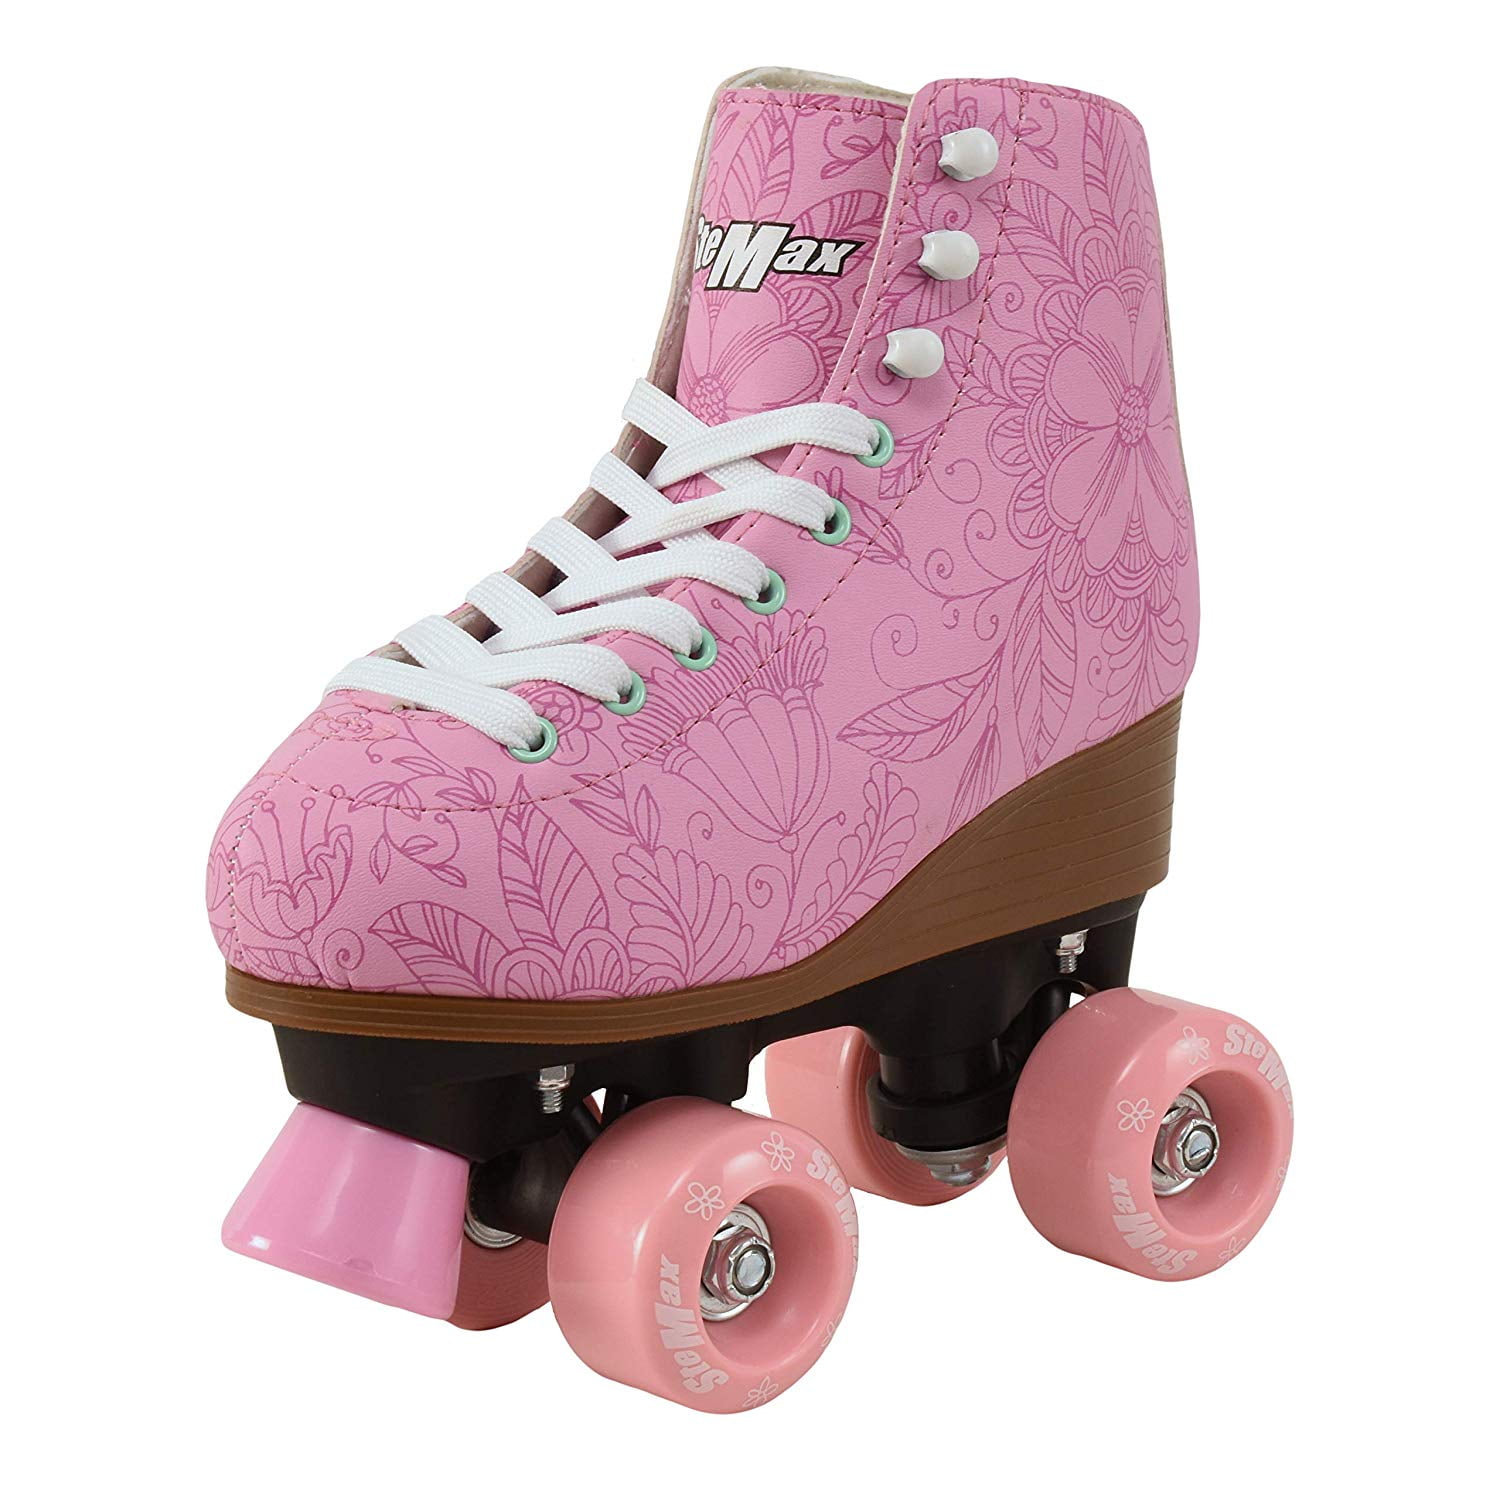 jessie Roller Skates for Women Light-Up Roller Skates Shoes Double-Row Saftey Derby Roller Skates for Girls Adult Beginners 